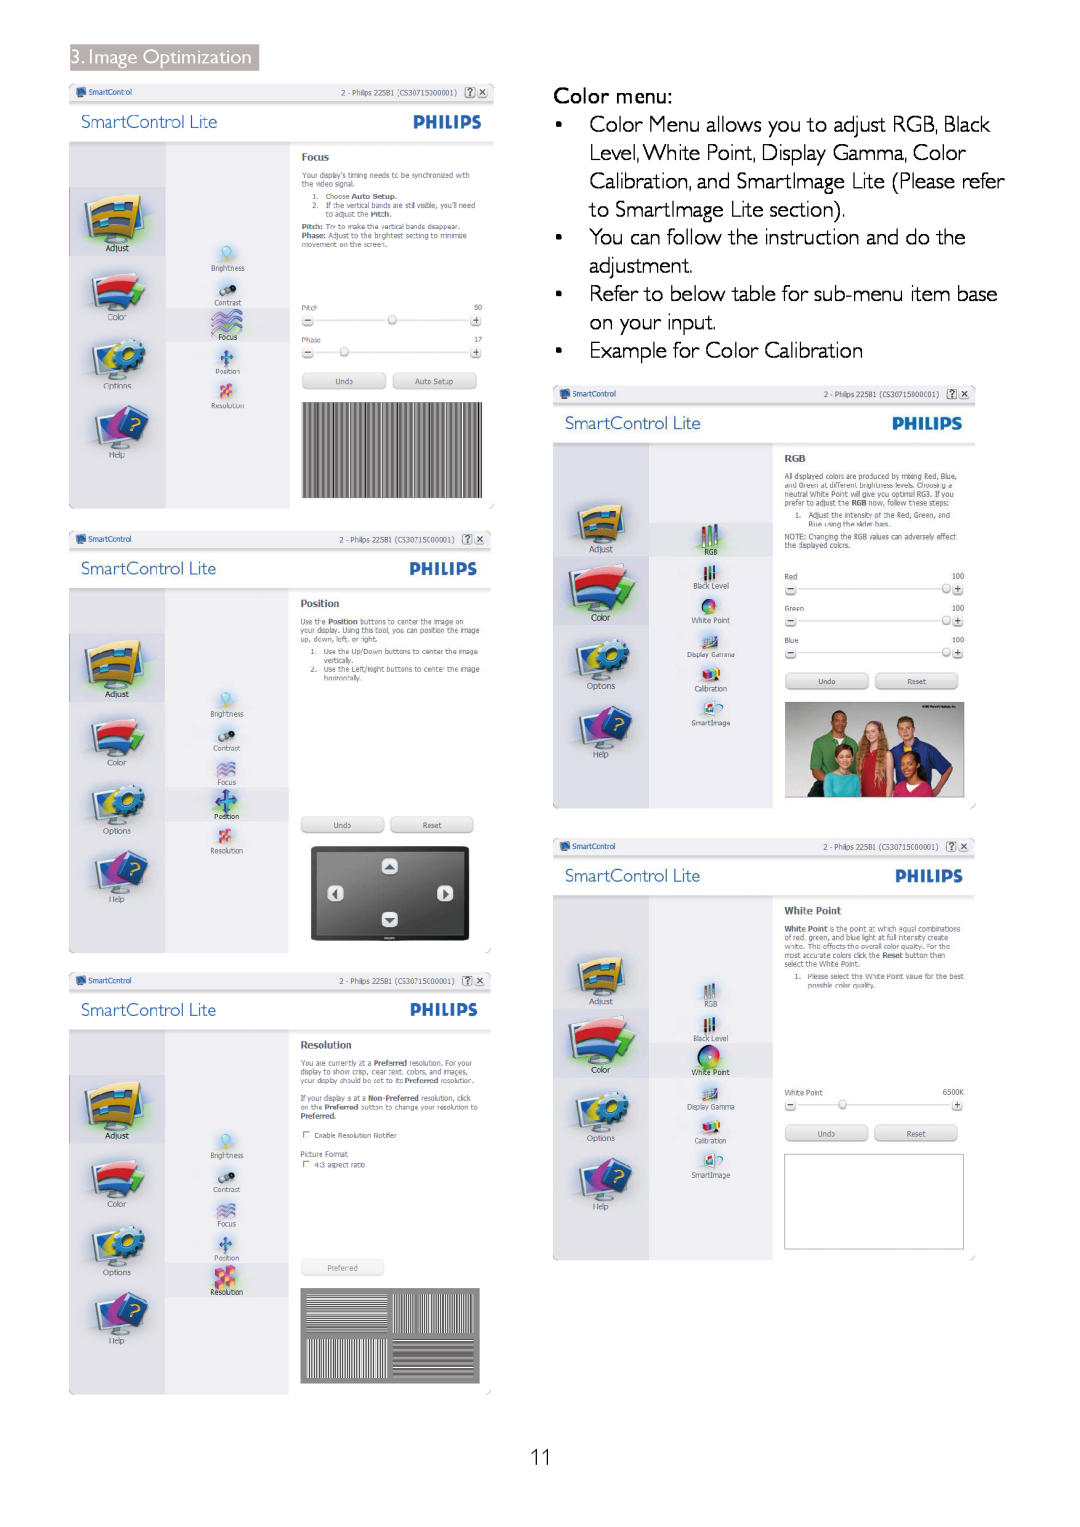 Philips 220V3 user manual Color menu, • Example for Color Calibration, Image Optimization 